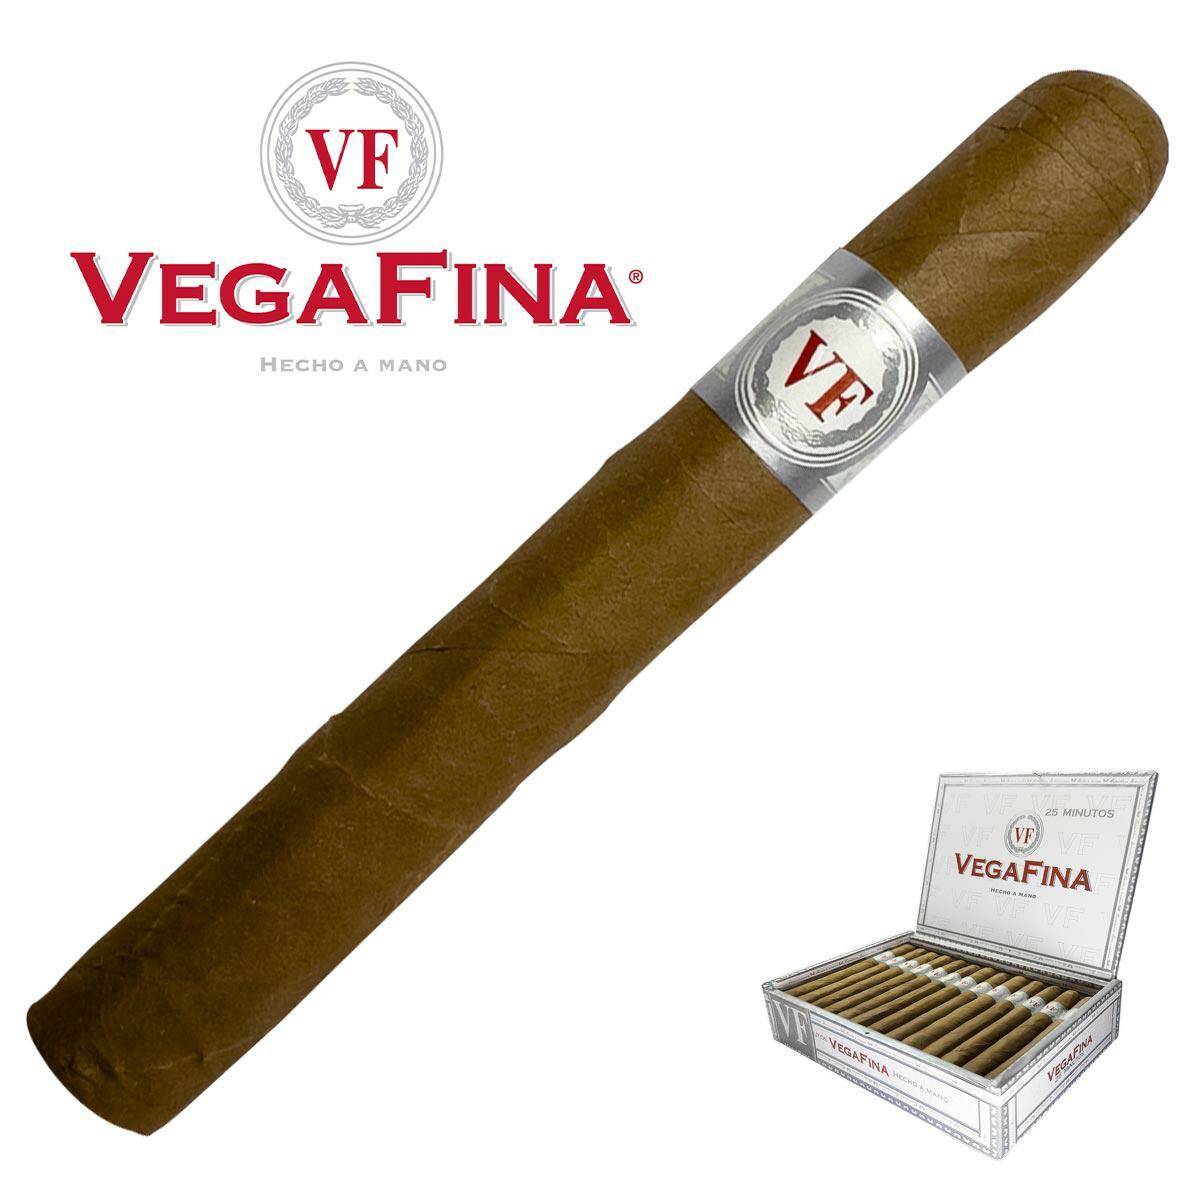 VegaFina - Minutos /1 Cygaro/Long